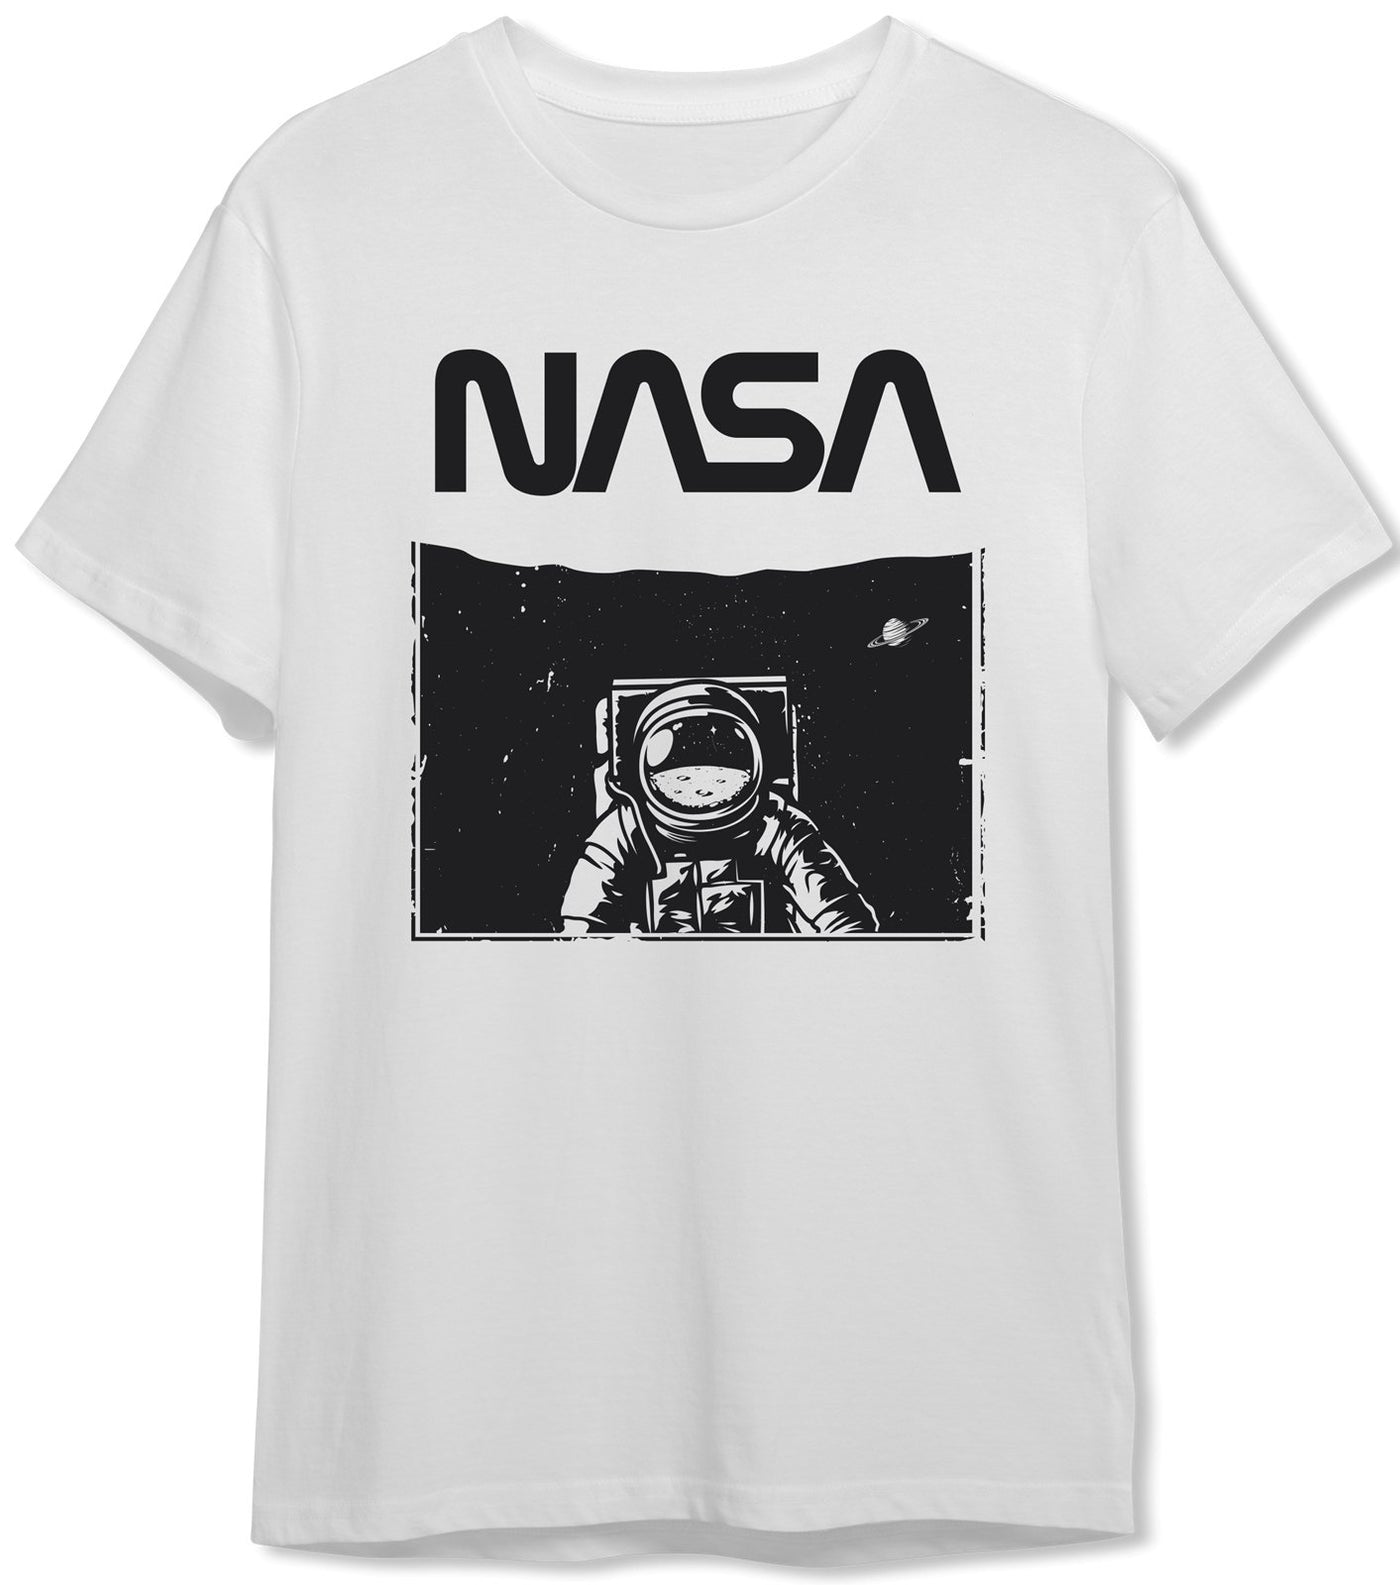 Bild: T-Shirt Herren - NASA Astronaut (Black&White) Geschenkidee